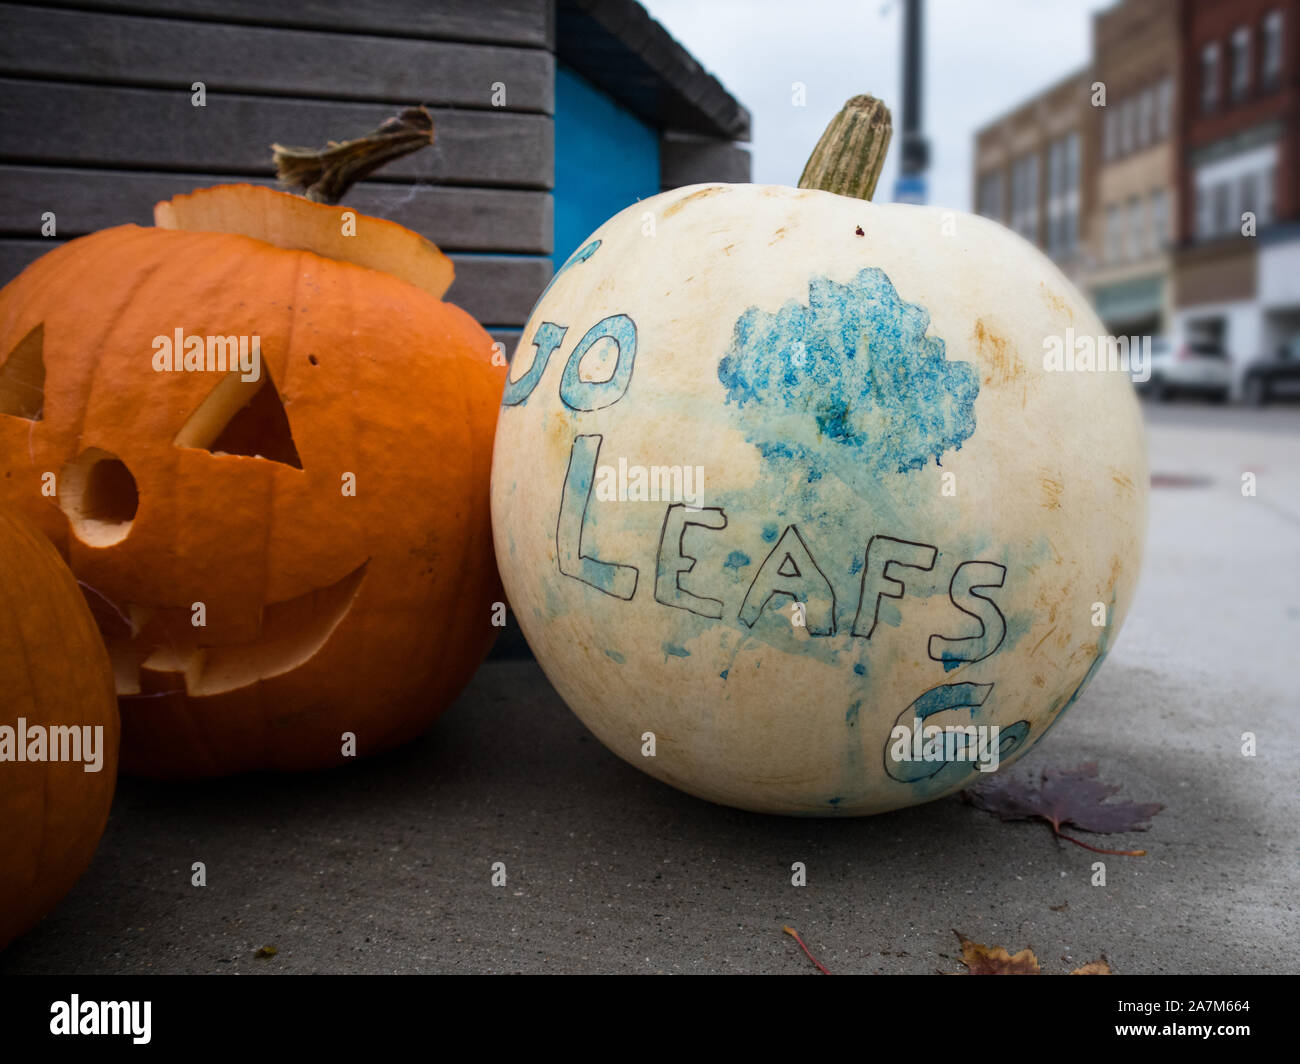 'Go Leafs Go' written on this Halloween pumpkin. Stock Photo